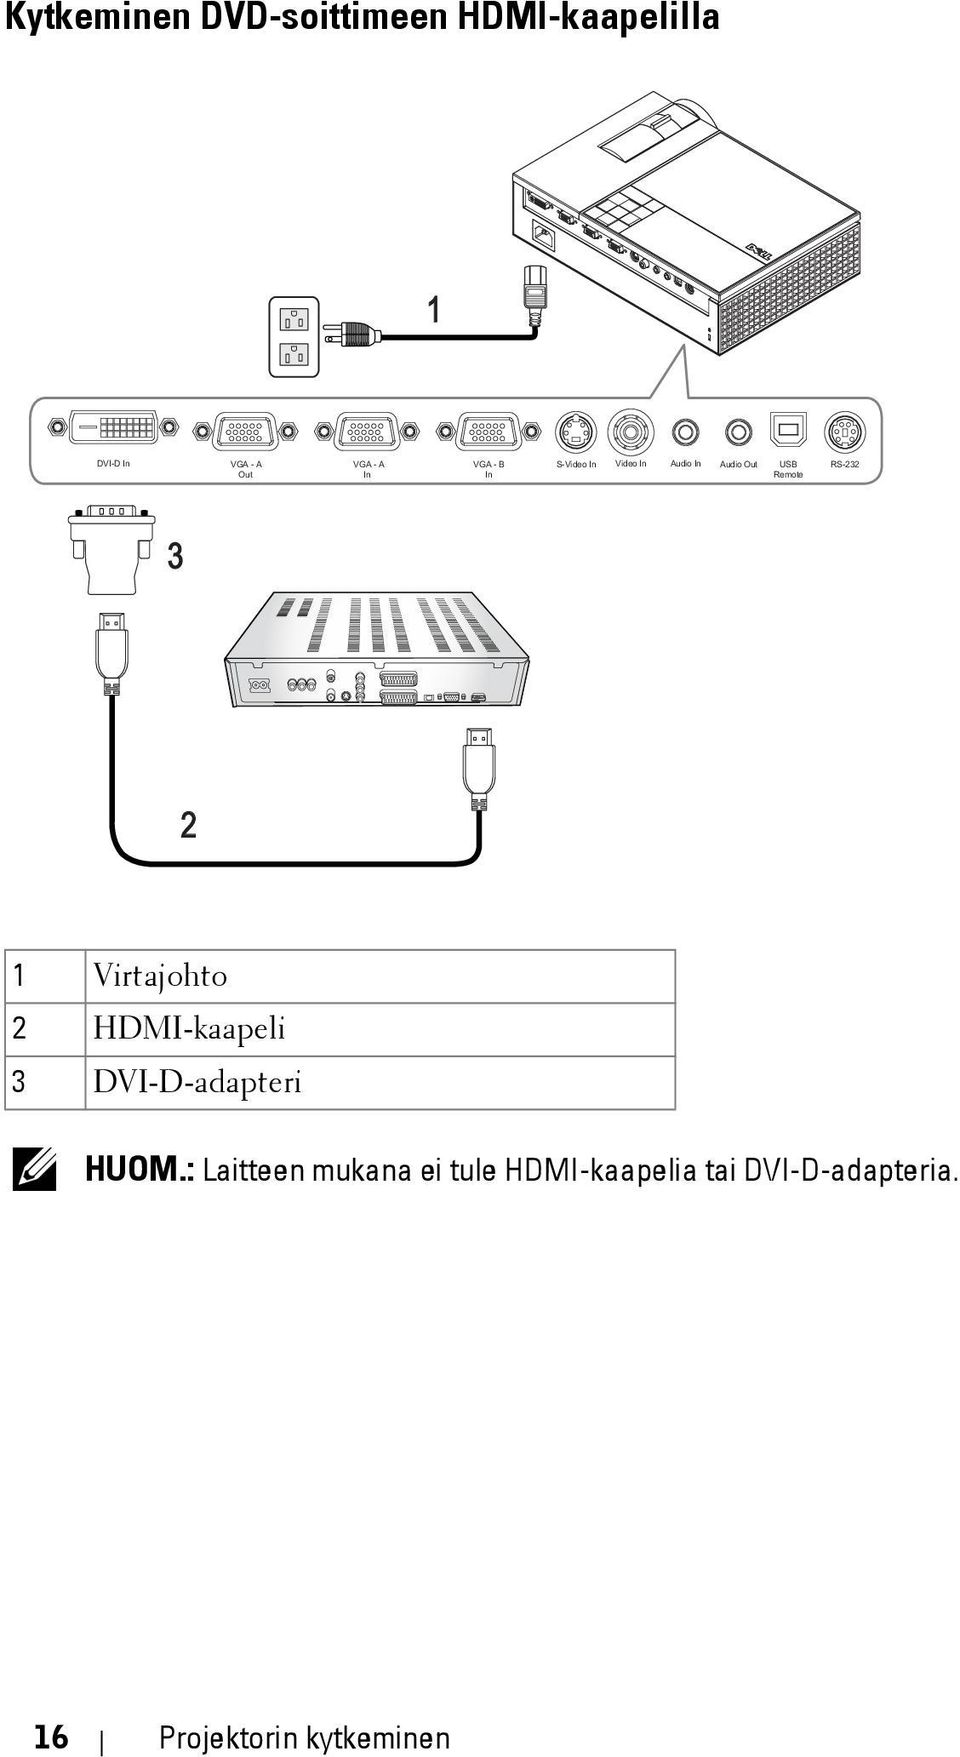 RS-232 3 2 1 Virtajohto 2 HDMI-kaapeli 3 DVI-D-adapteri HUOM.